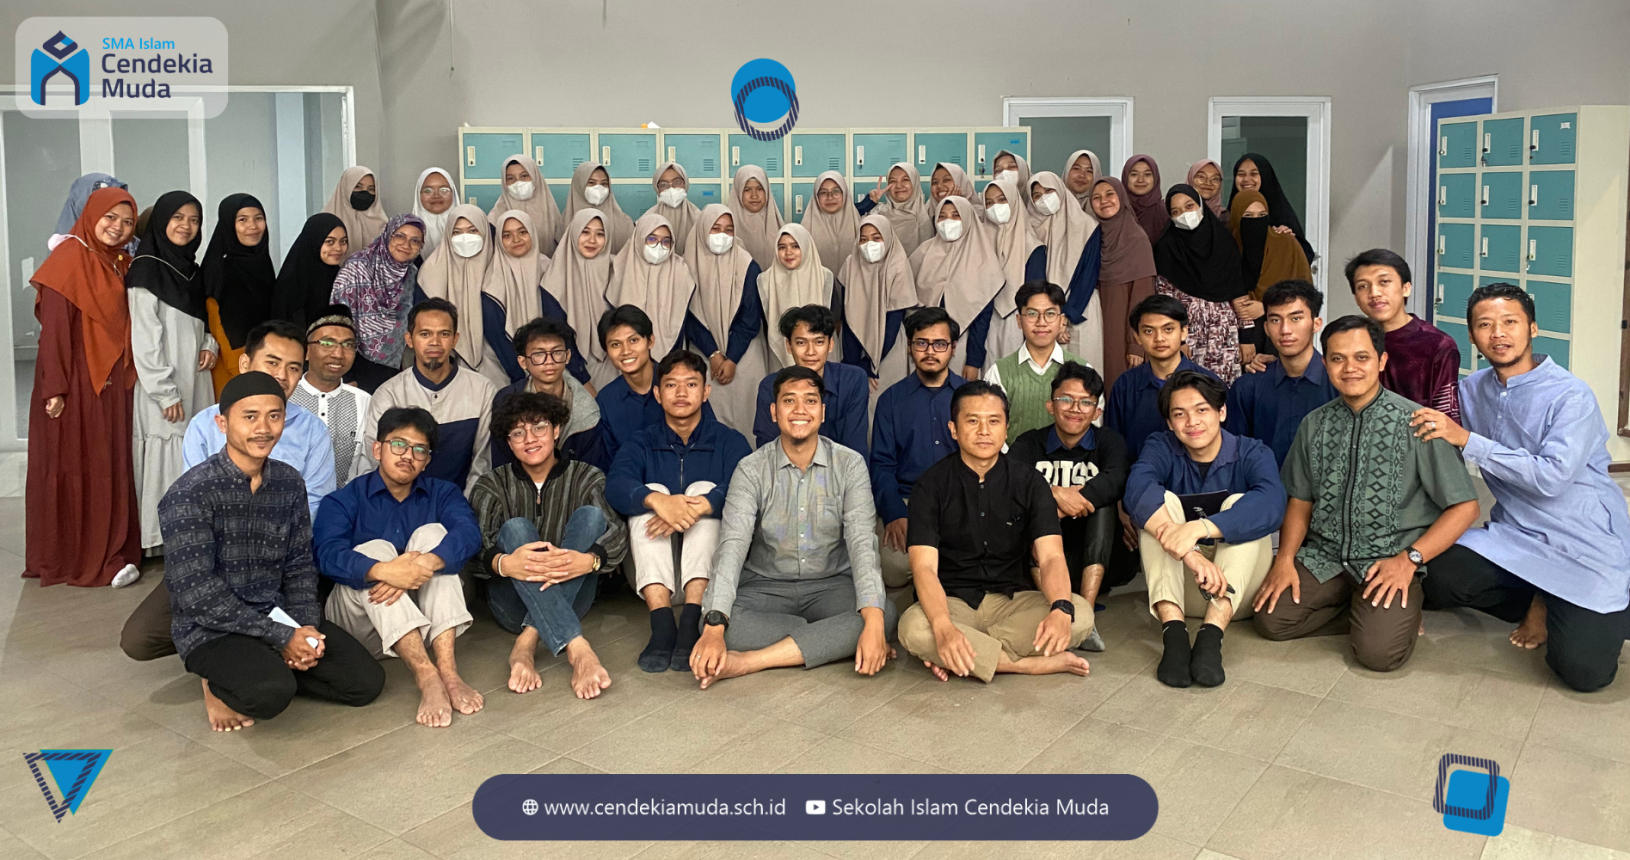 SMA Islam Cendekia Muda